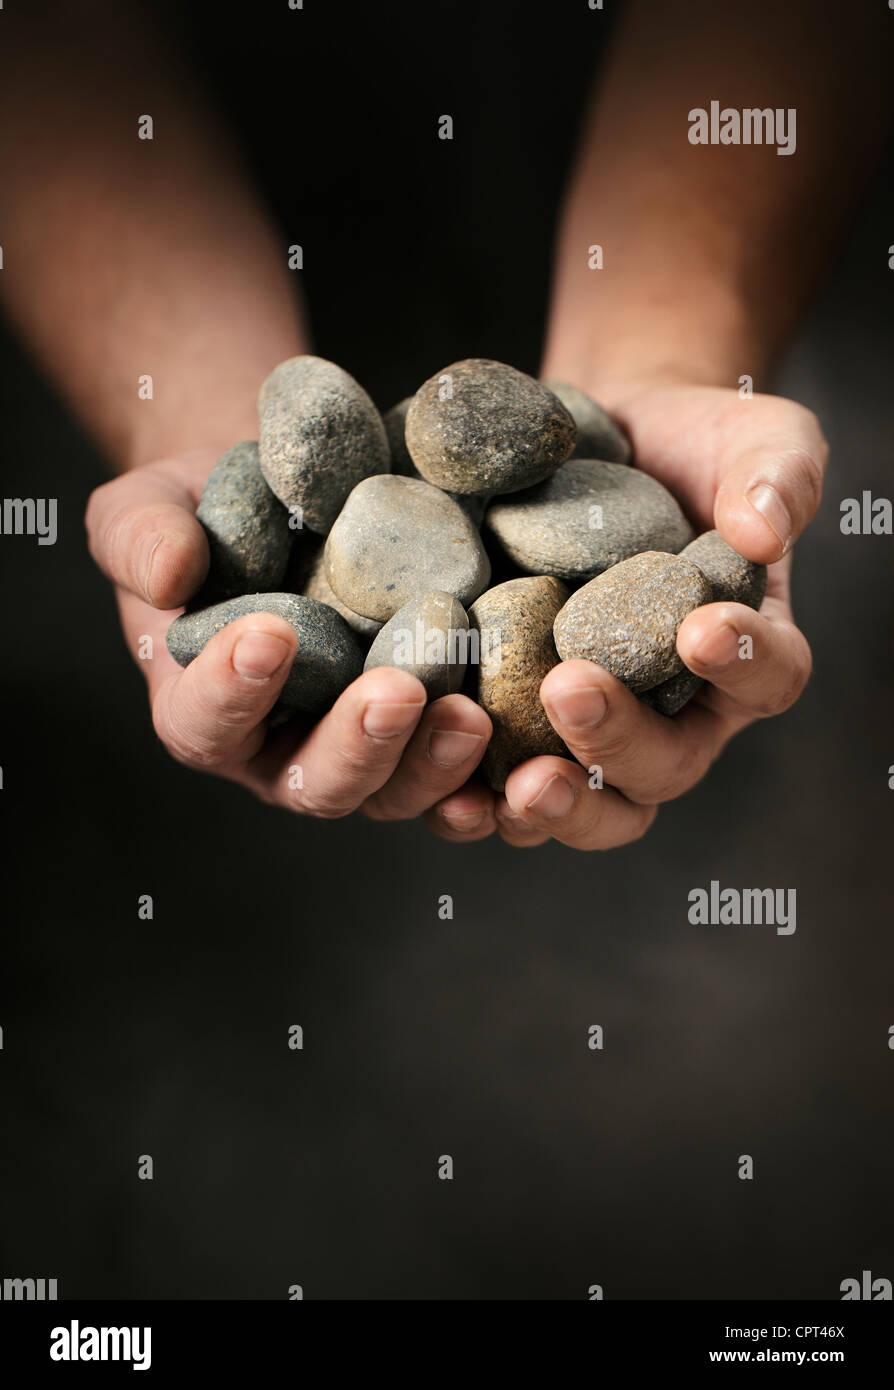 Five Small Rocks